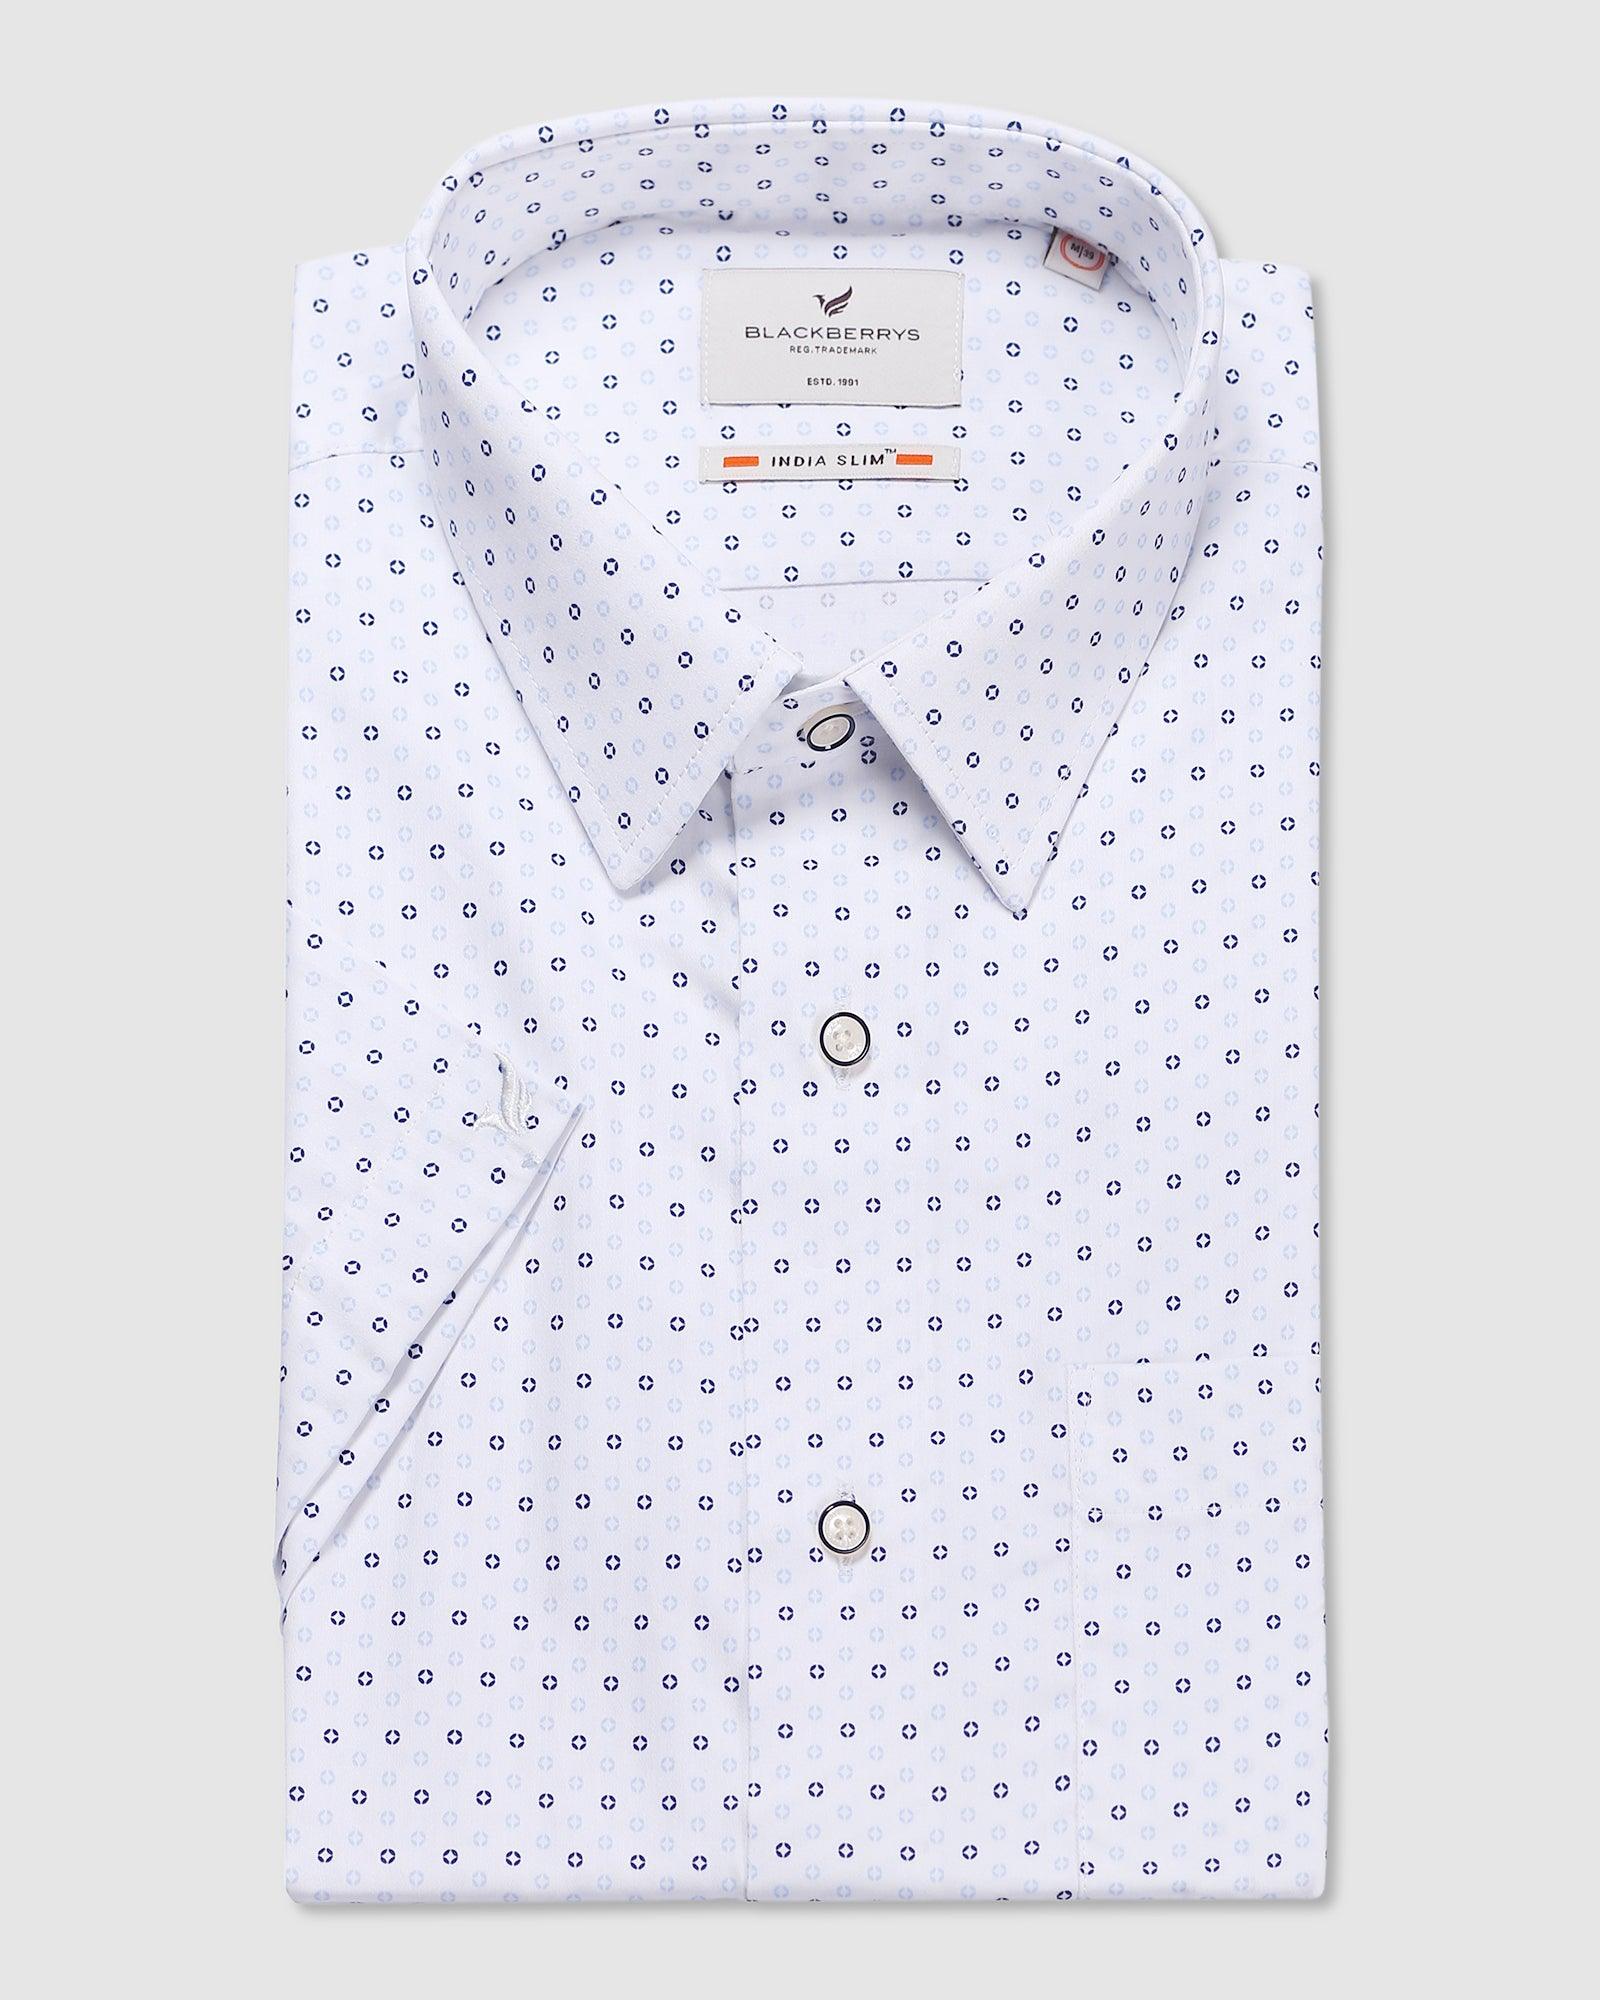 Formal Half Sleeve White Printed Shirt - Ritz